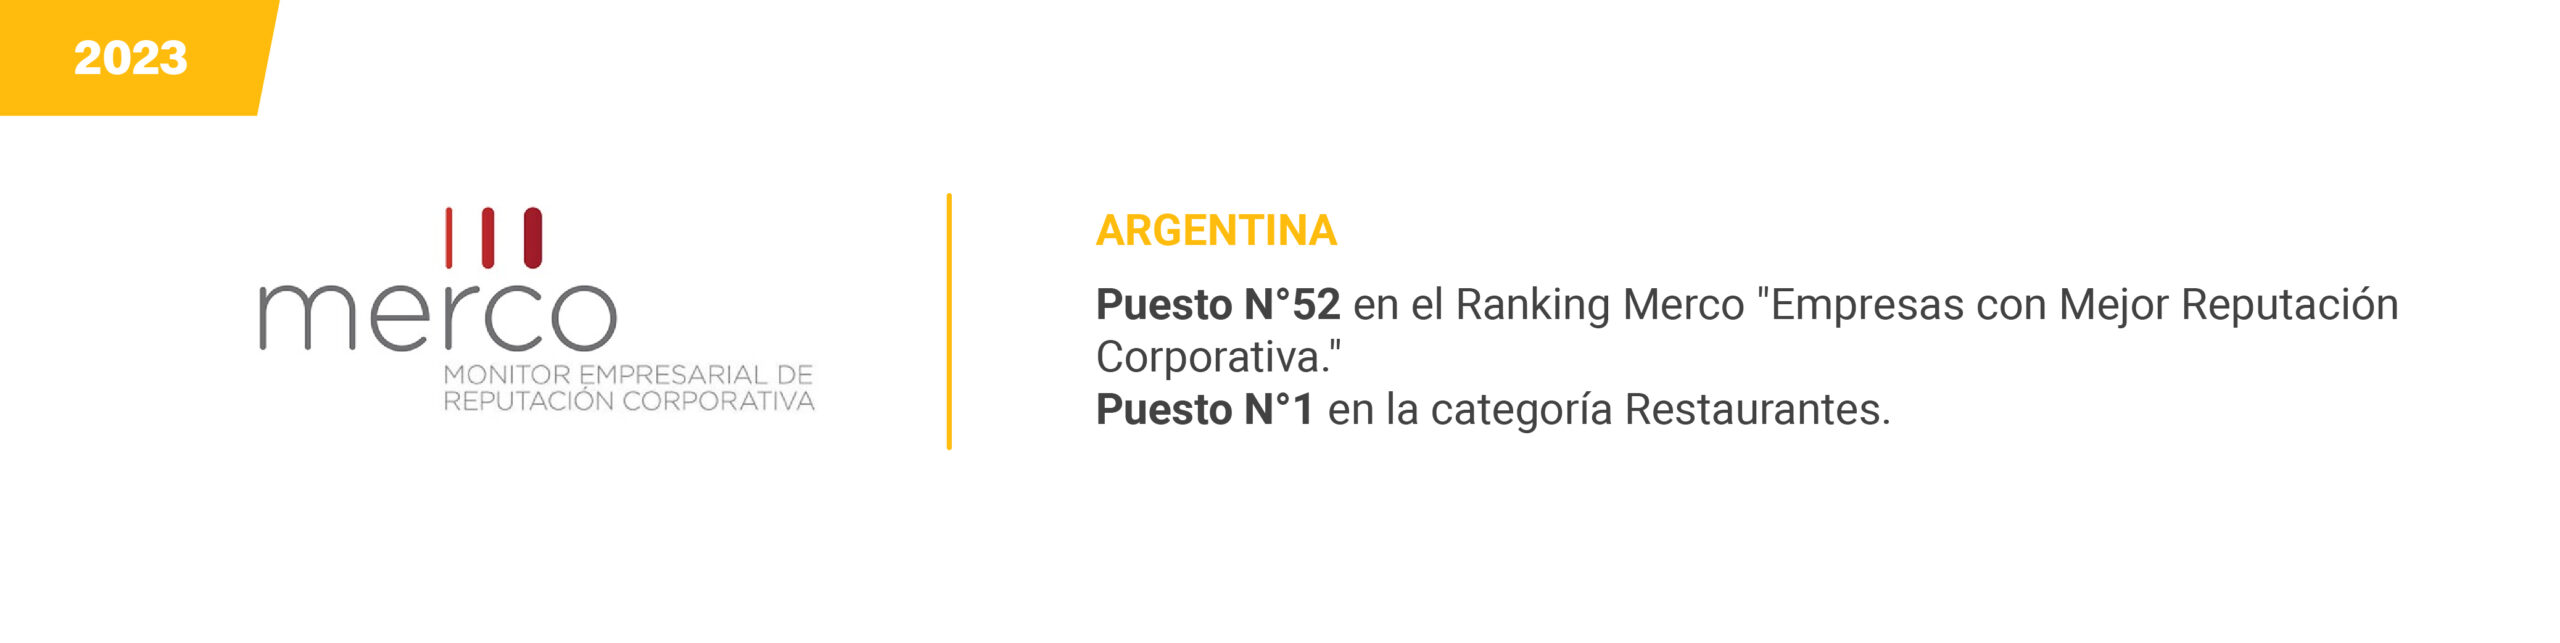 MERCO - Argentina 2023